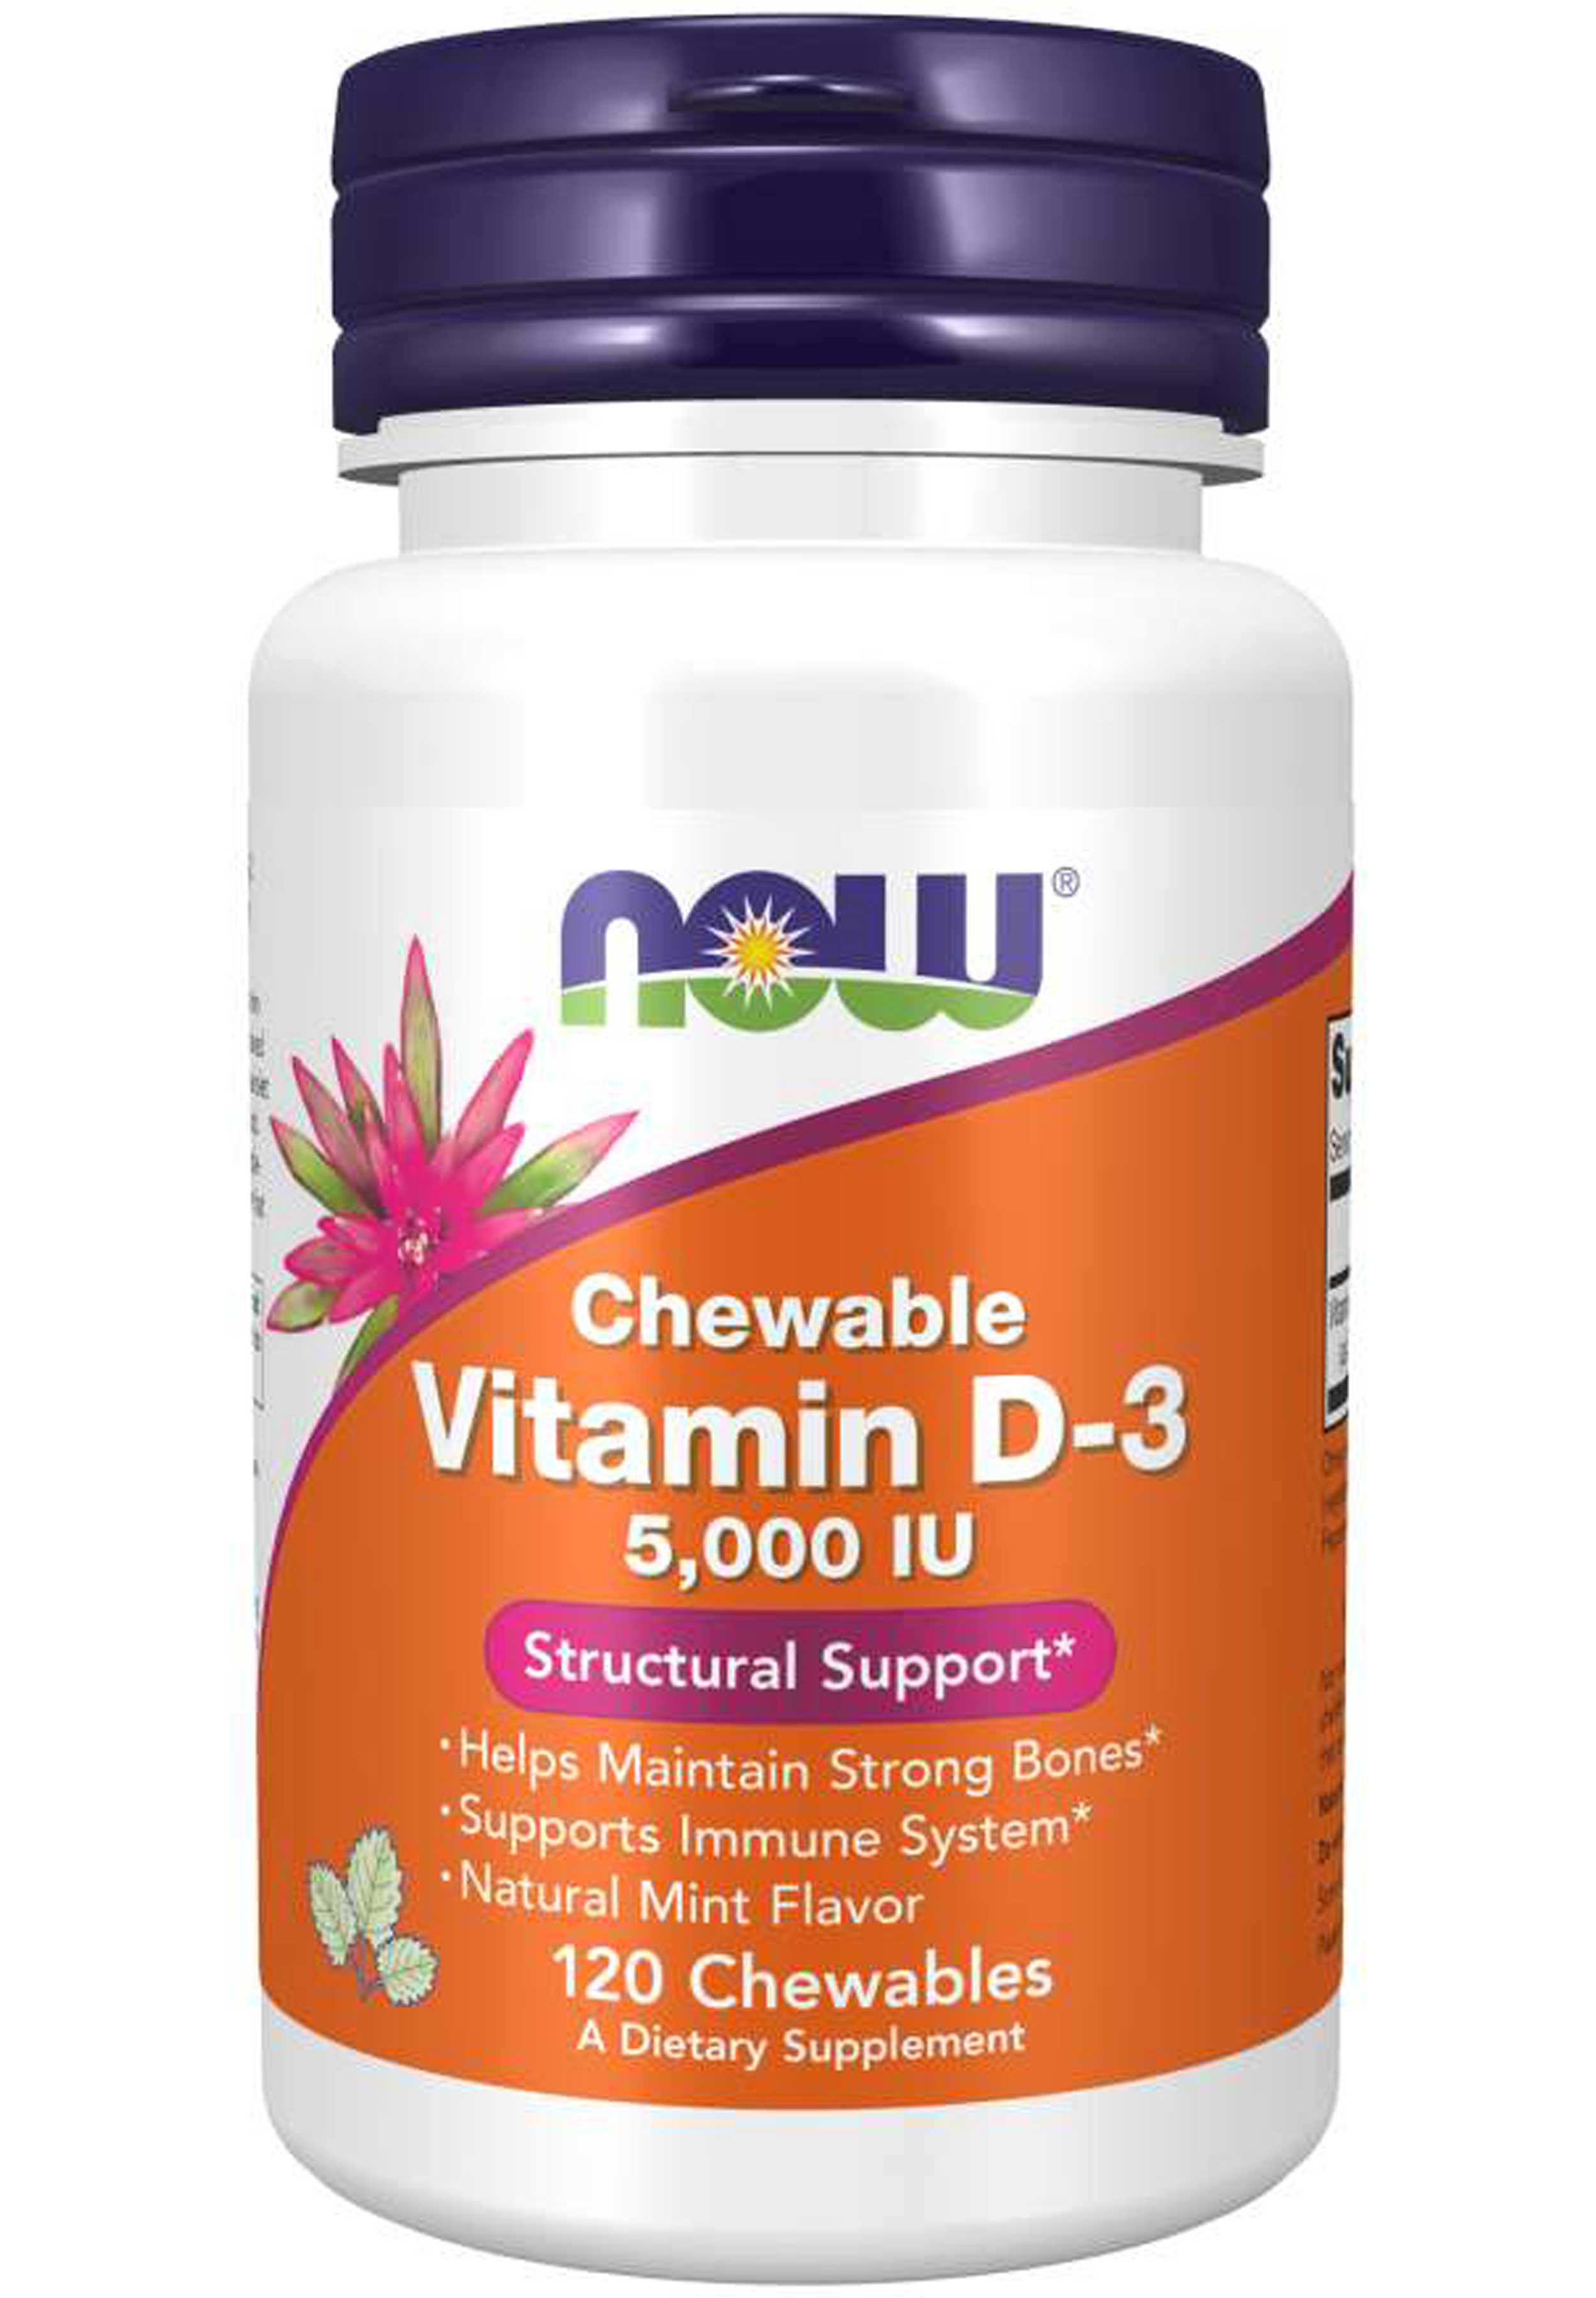 NOW Chewable Vitamin D-3 5,000 IU